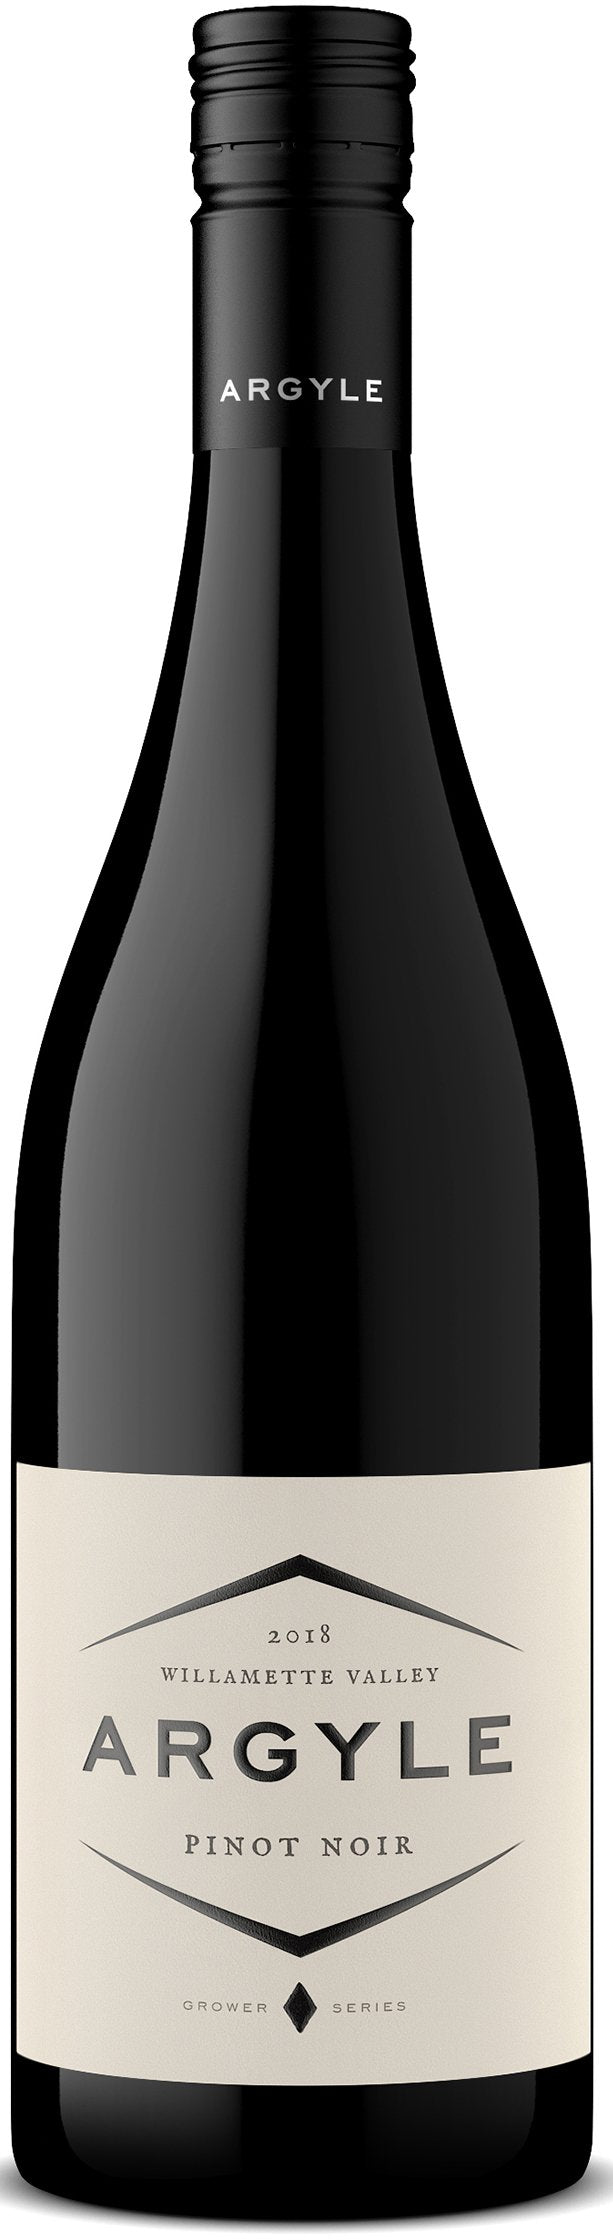 Argyle Pinot Noir Willamette Valley 2018